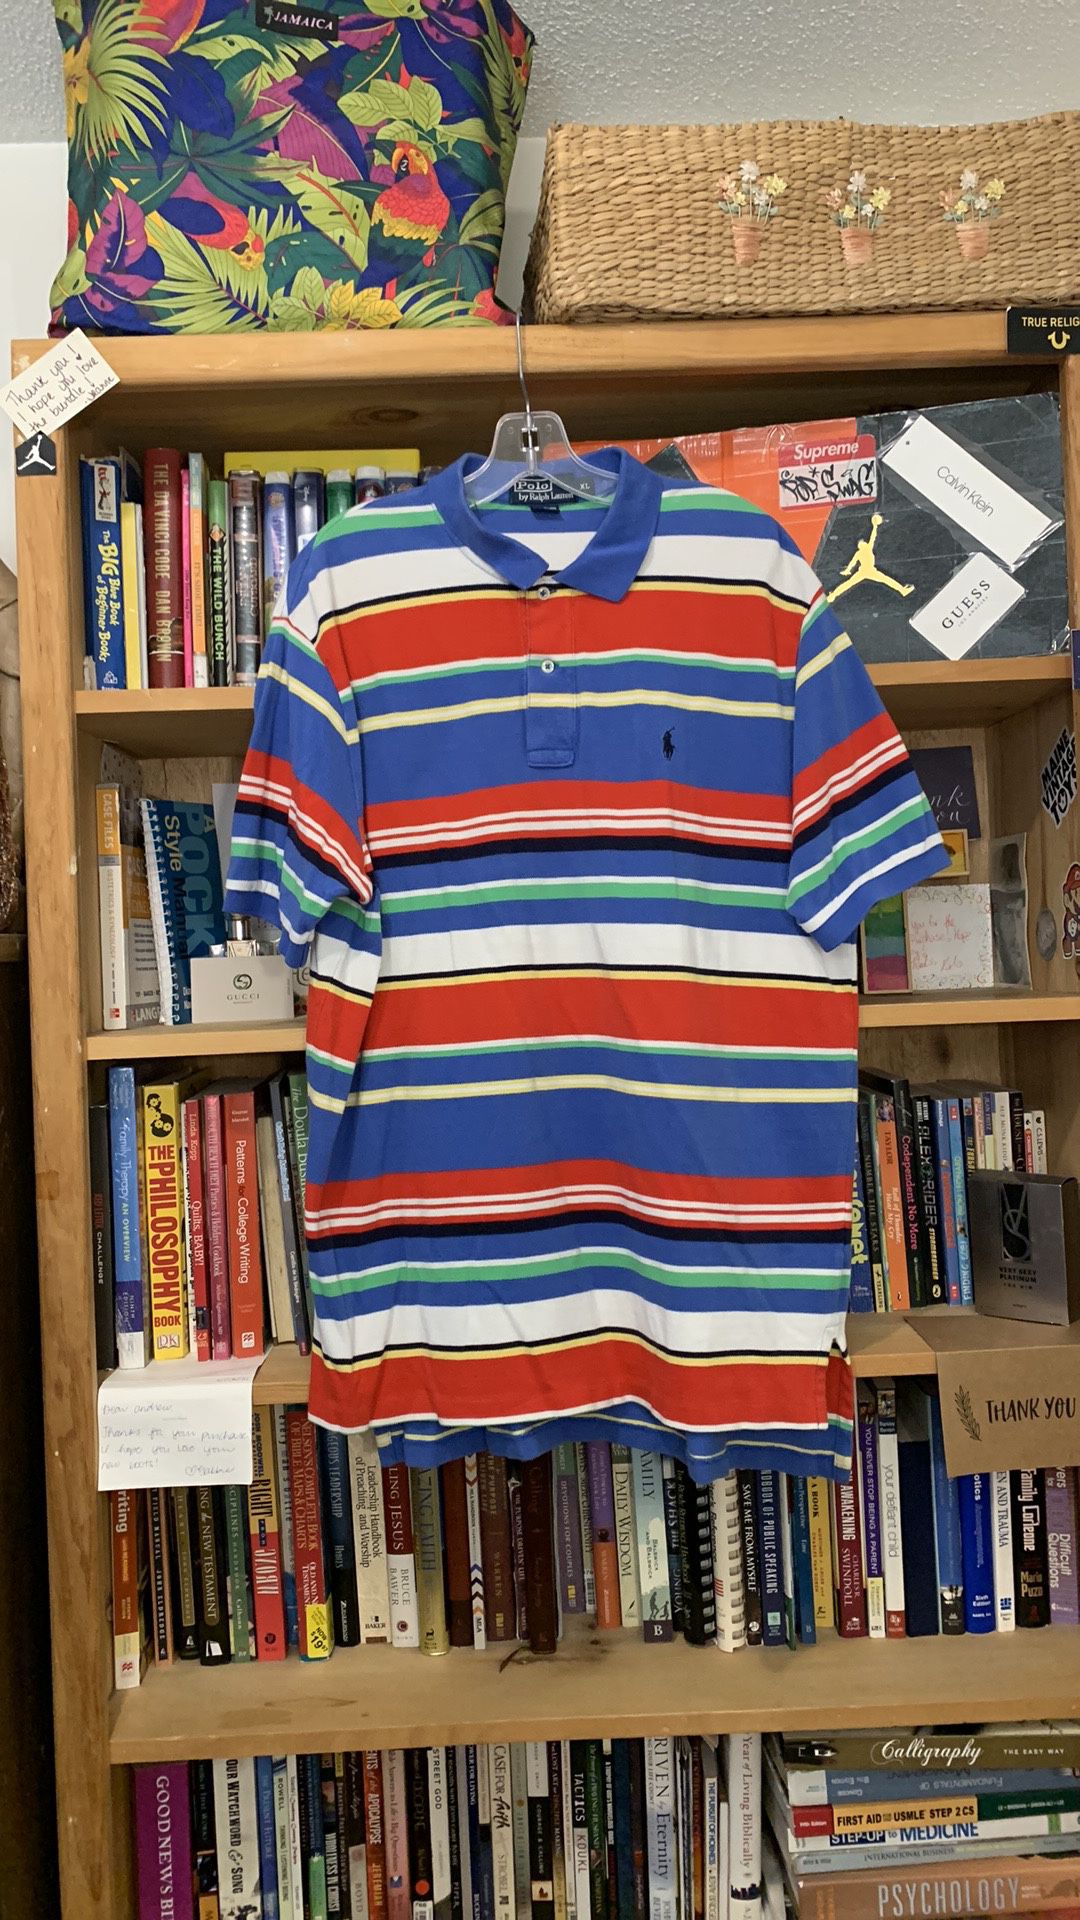 POLO by RALPH LAUREN-men’s multicolored stripe short sleeve polo shirt